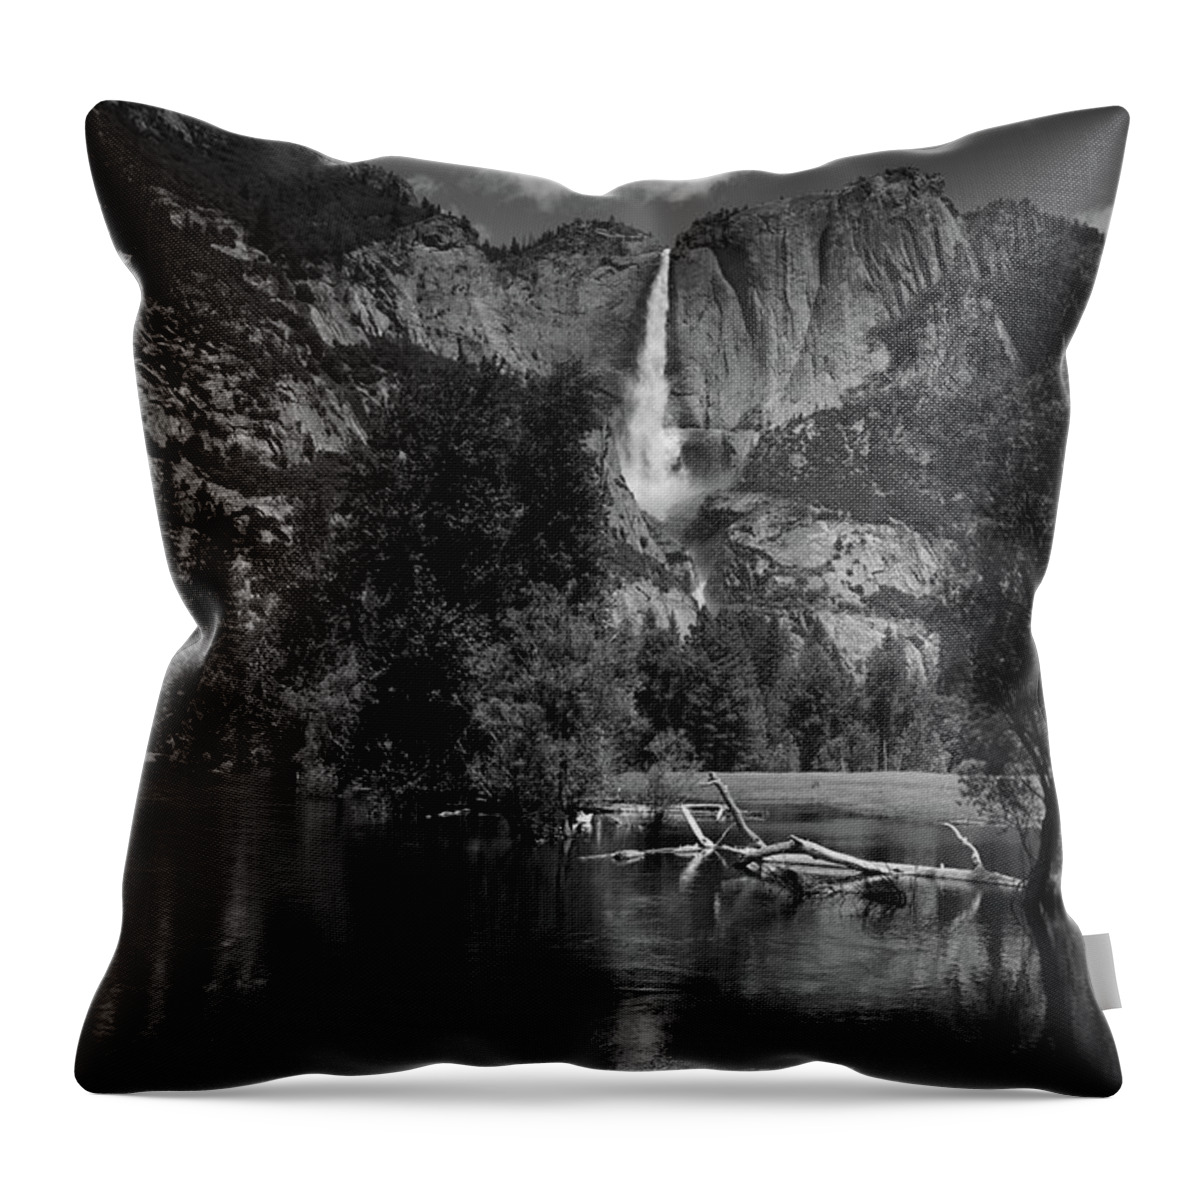 Yosemite Falls From Swinging Bridge Throw Pillow featuring the photograph Yosemite Falls from Swinging Bridge in Black and White by Raymond Salani III